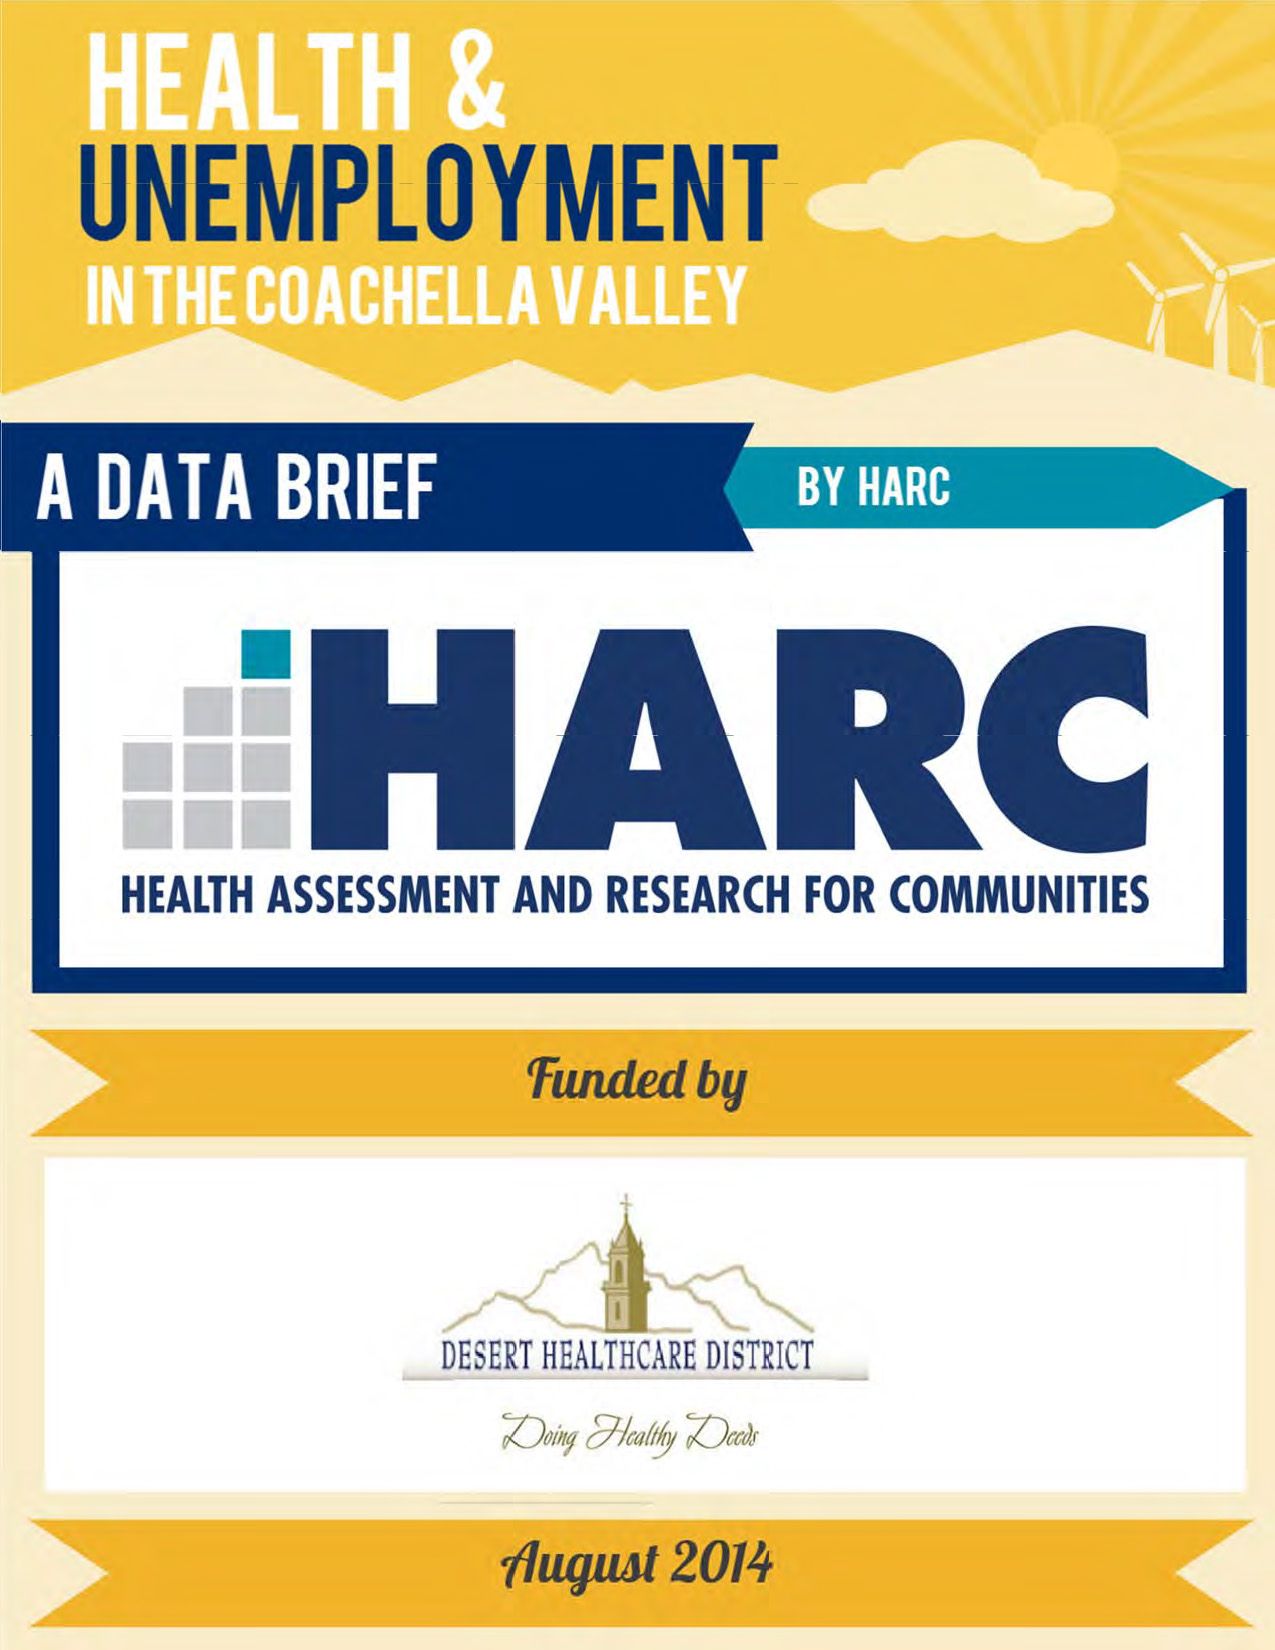 2014 Data Brief on Health and Unemployment